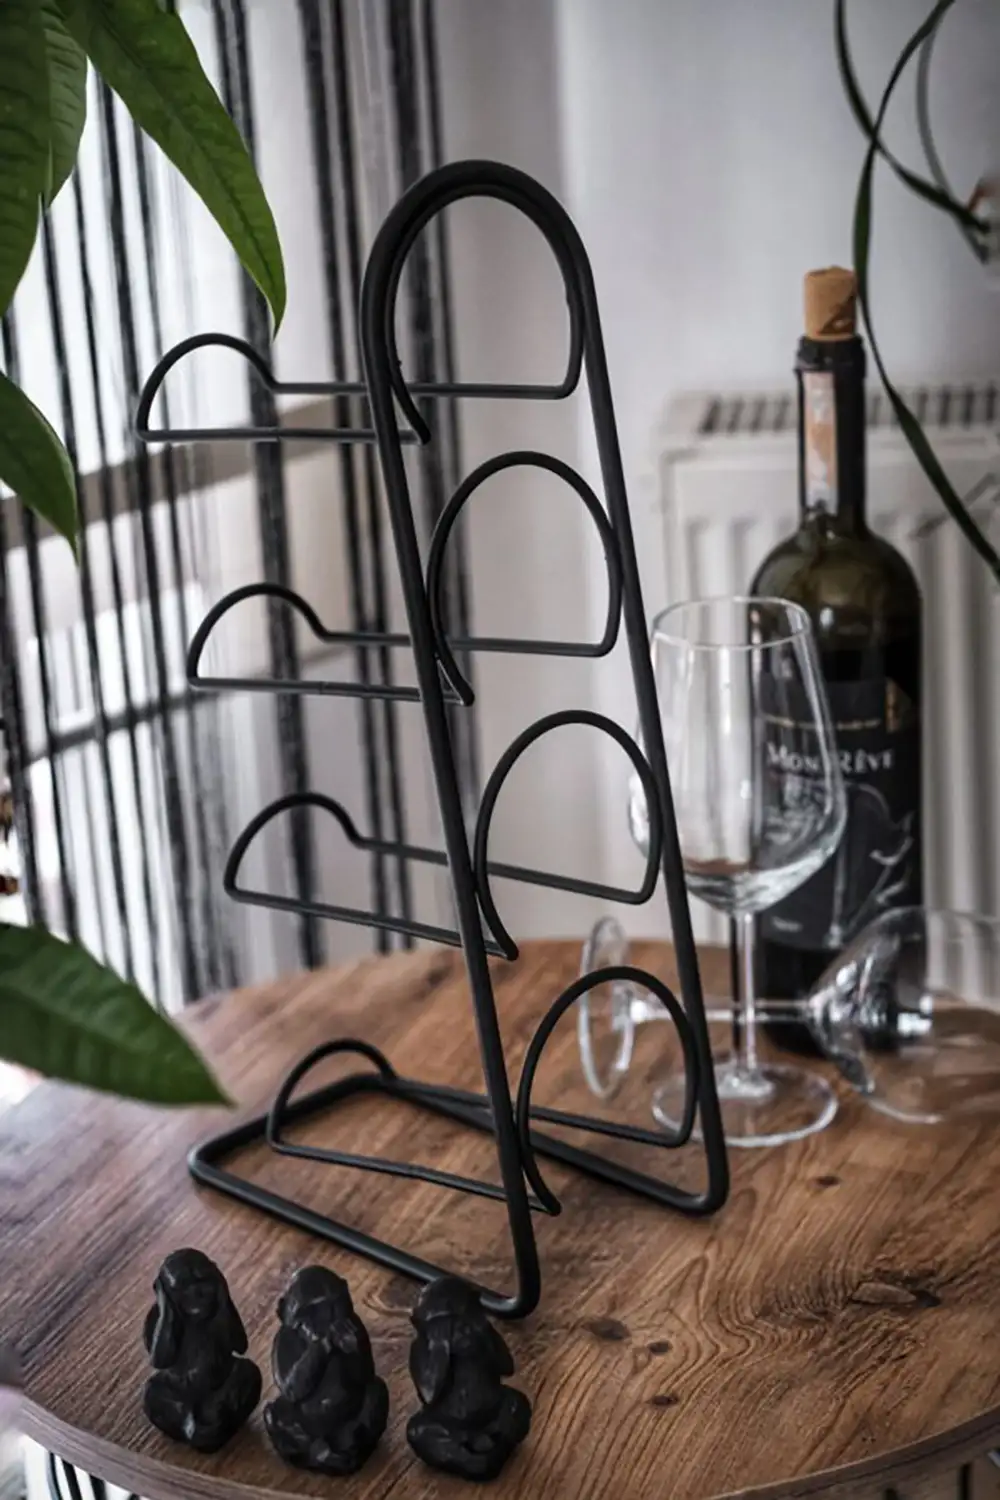 Decorative Wire Wine Rack (4 Shelves) - Thumbnail